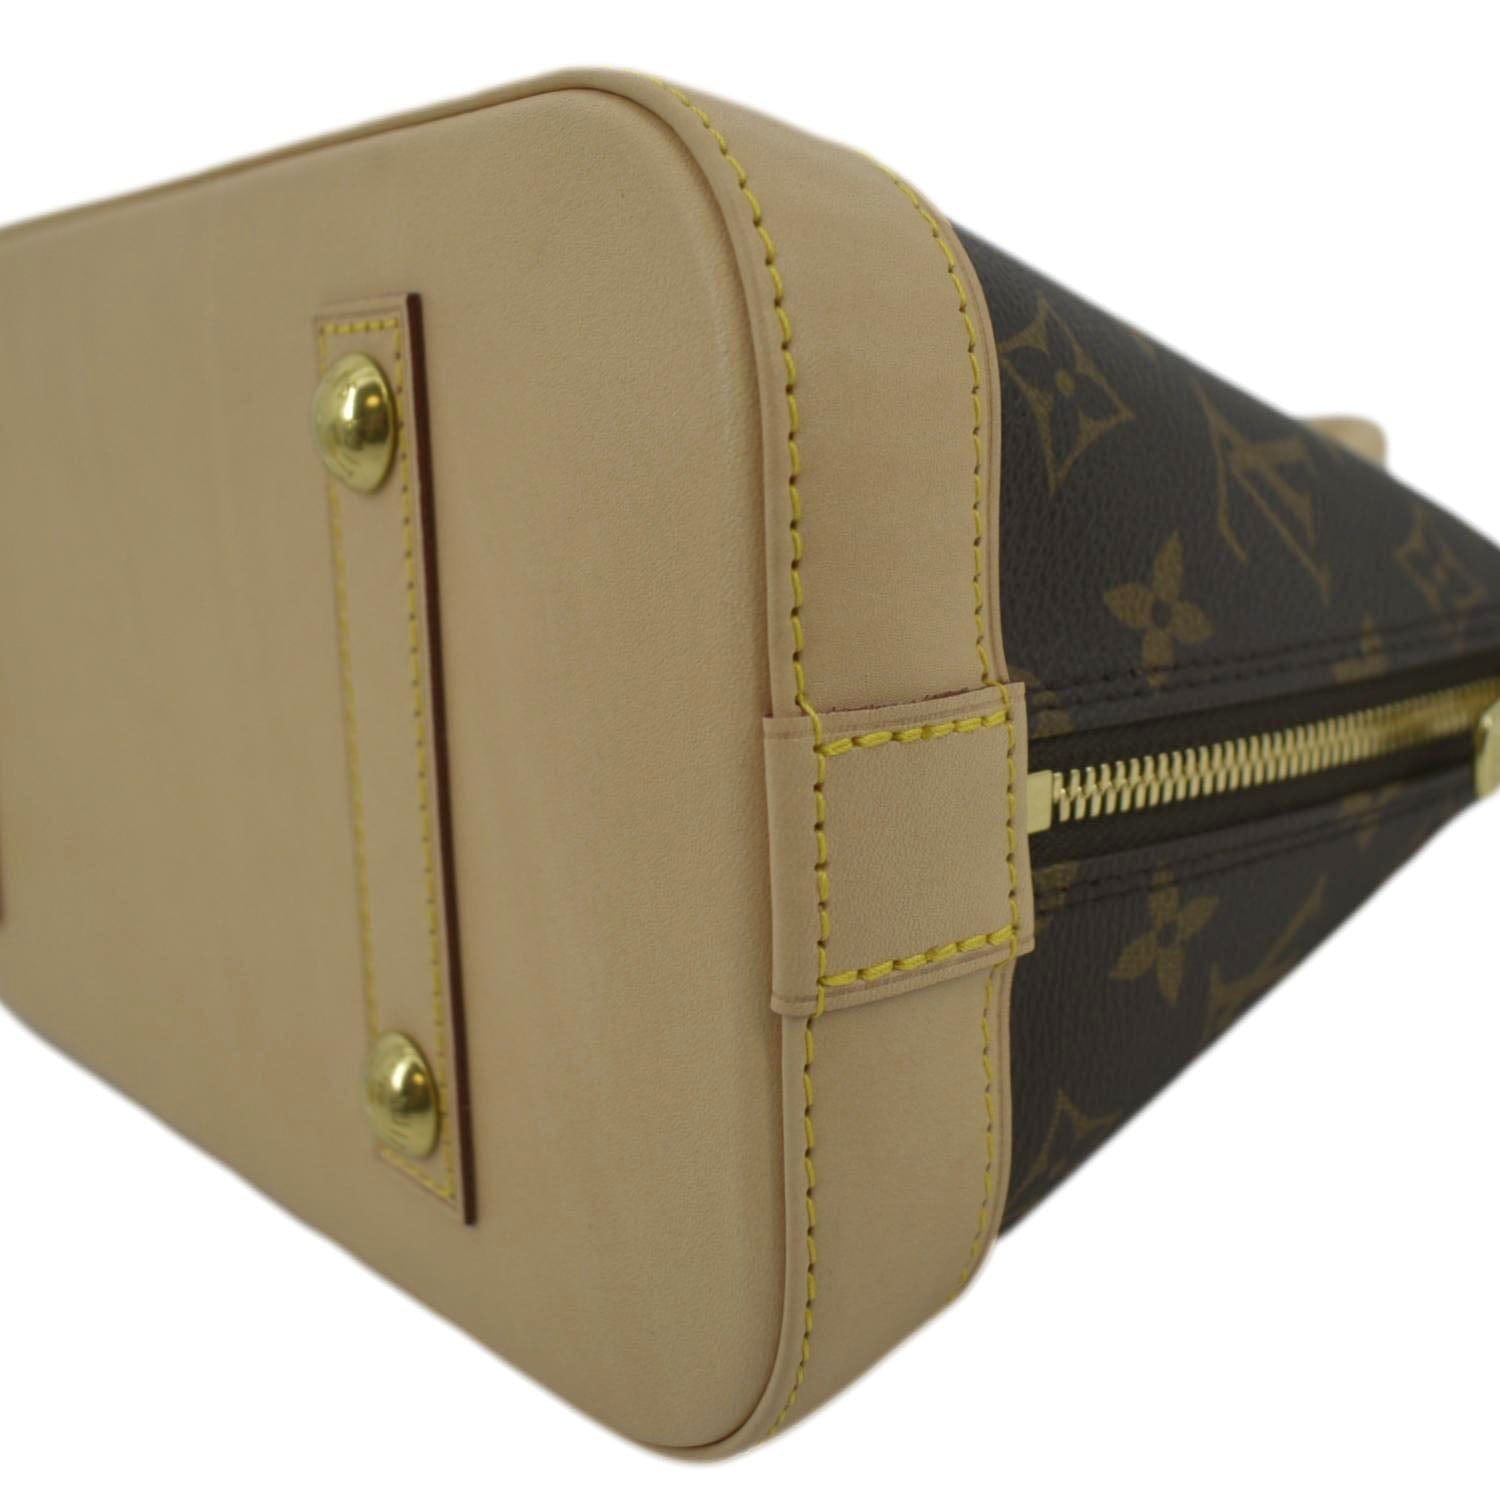 Authentic Louis Vuitton Satchel Bag Alma Monogram Used LV Handbag